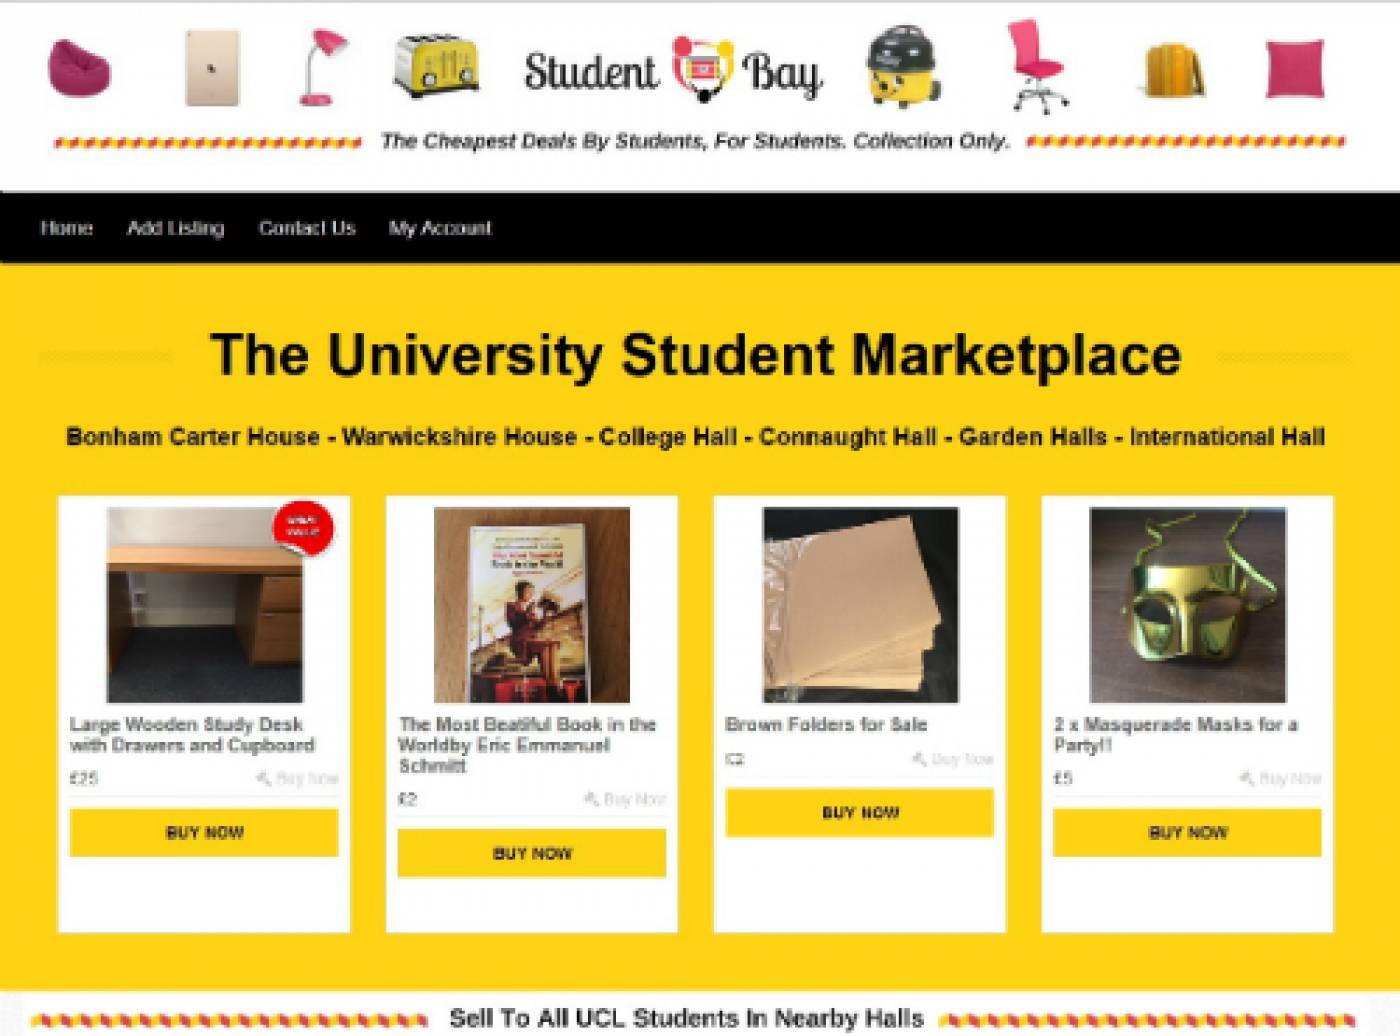 Student Bay - an Intercampus university marketplace